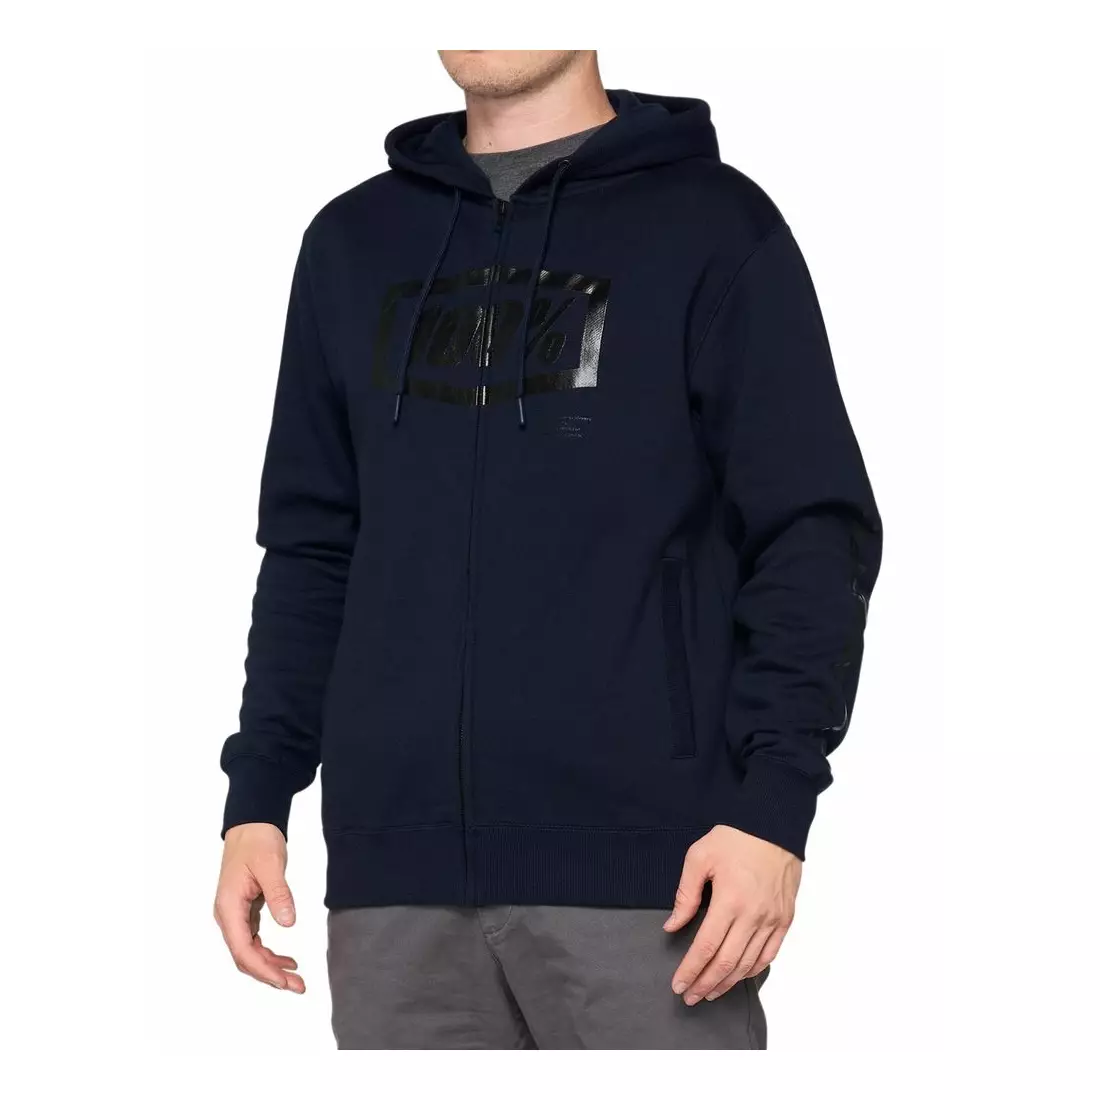 100% men's sweatshirt SYNDICATE Hooded Zip Sweatshirt navy black STO-36017-402-11